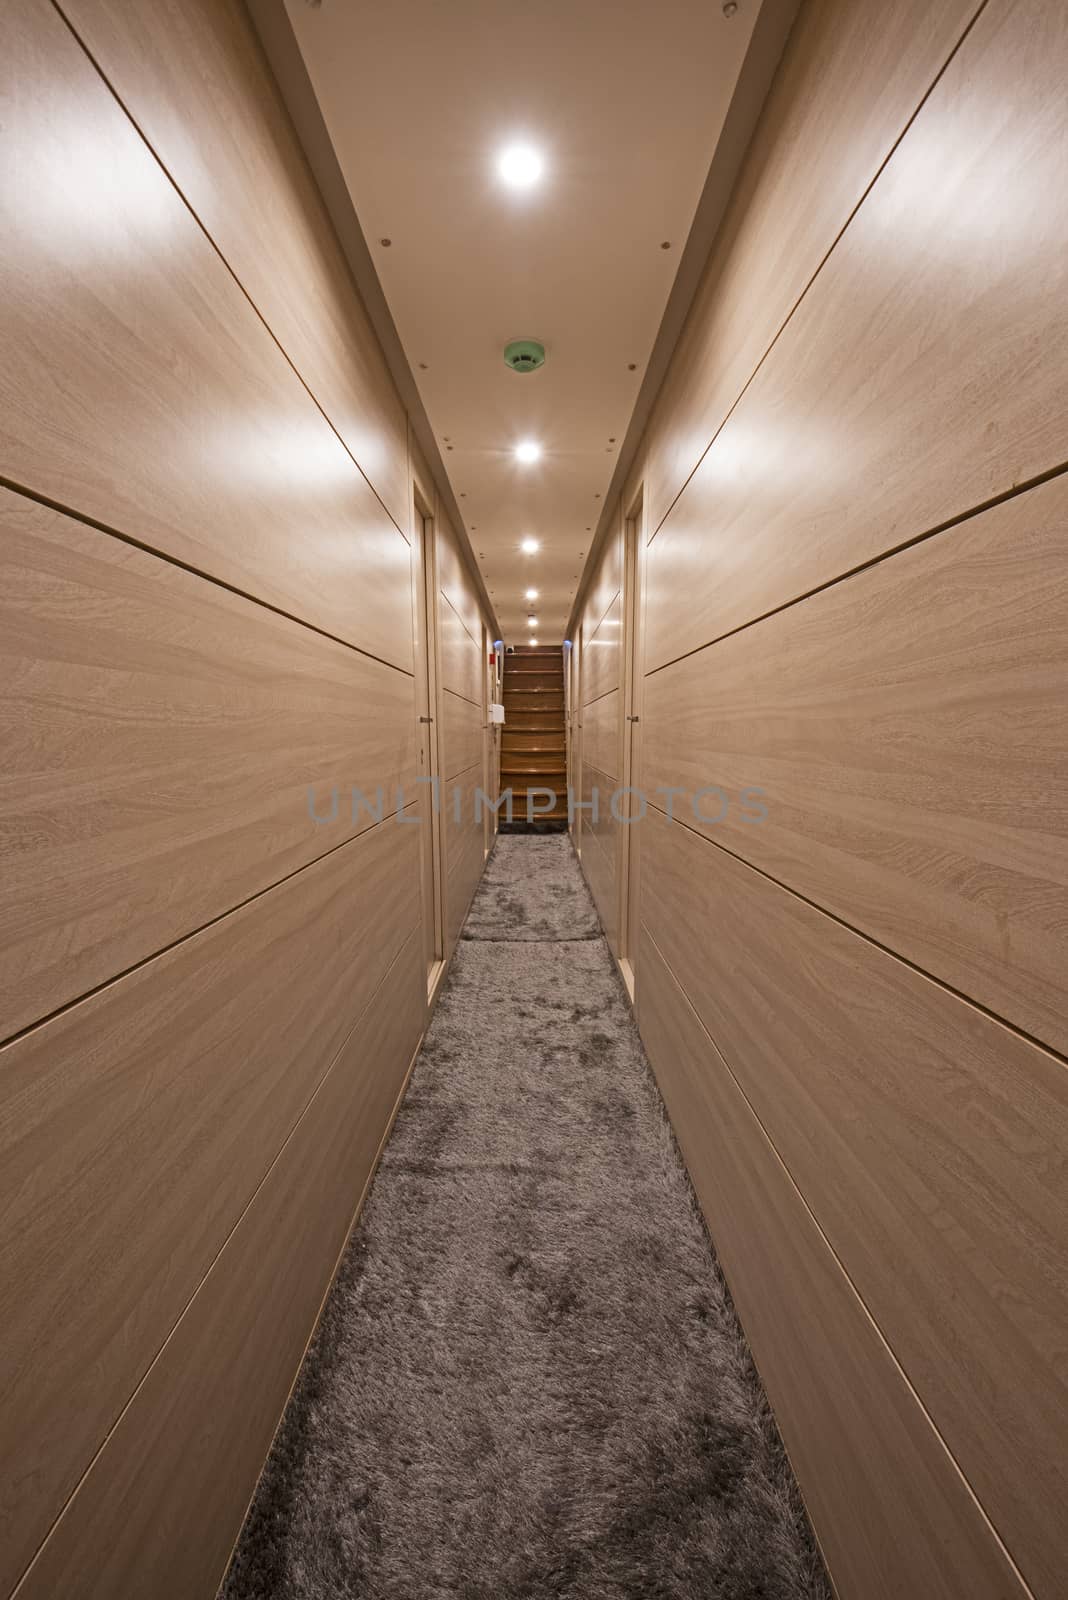 Interior design furnishing decor of corridor area in a large luxury motor yacht